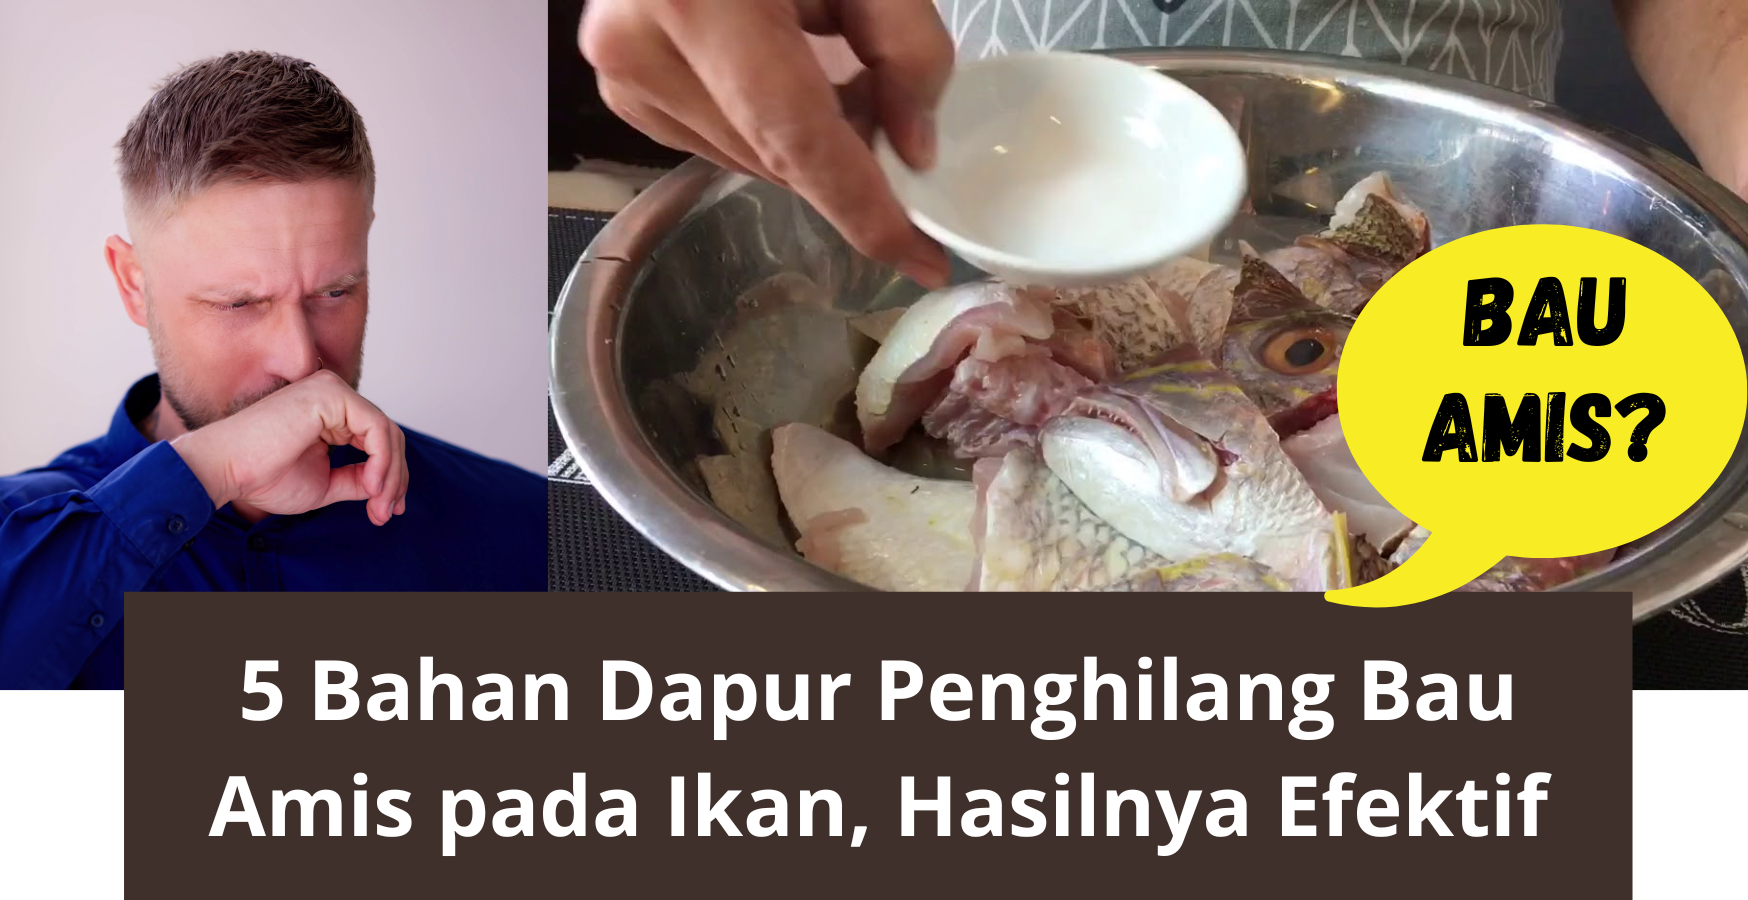 5 Bahan Dapur Penghilang Bau Amis pada Ikan, Paling Efektif